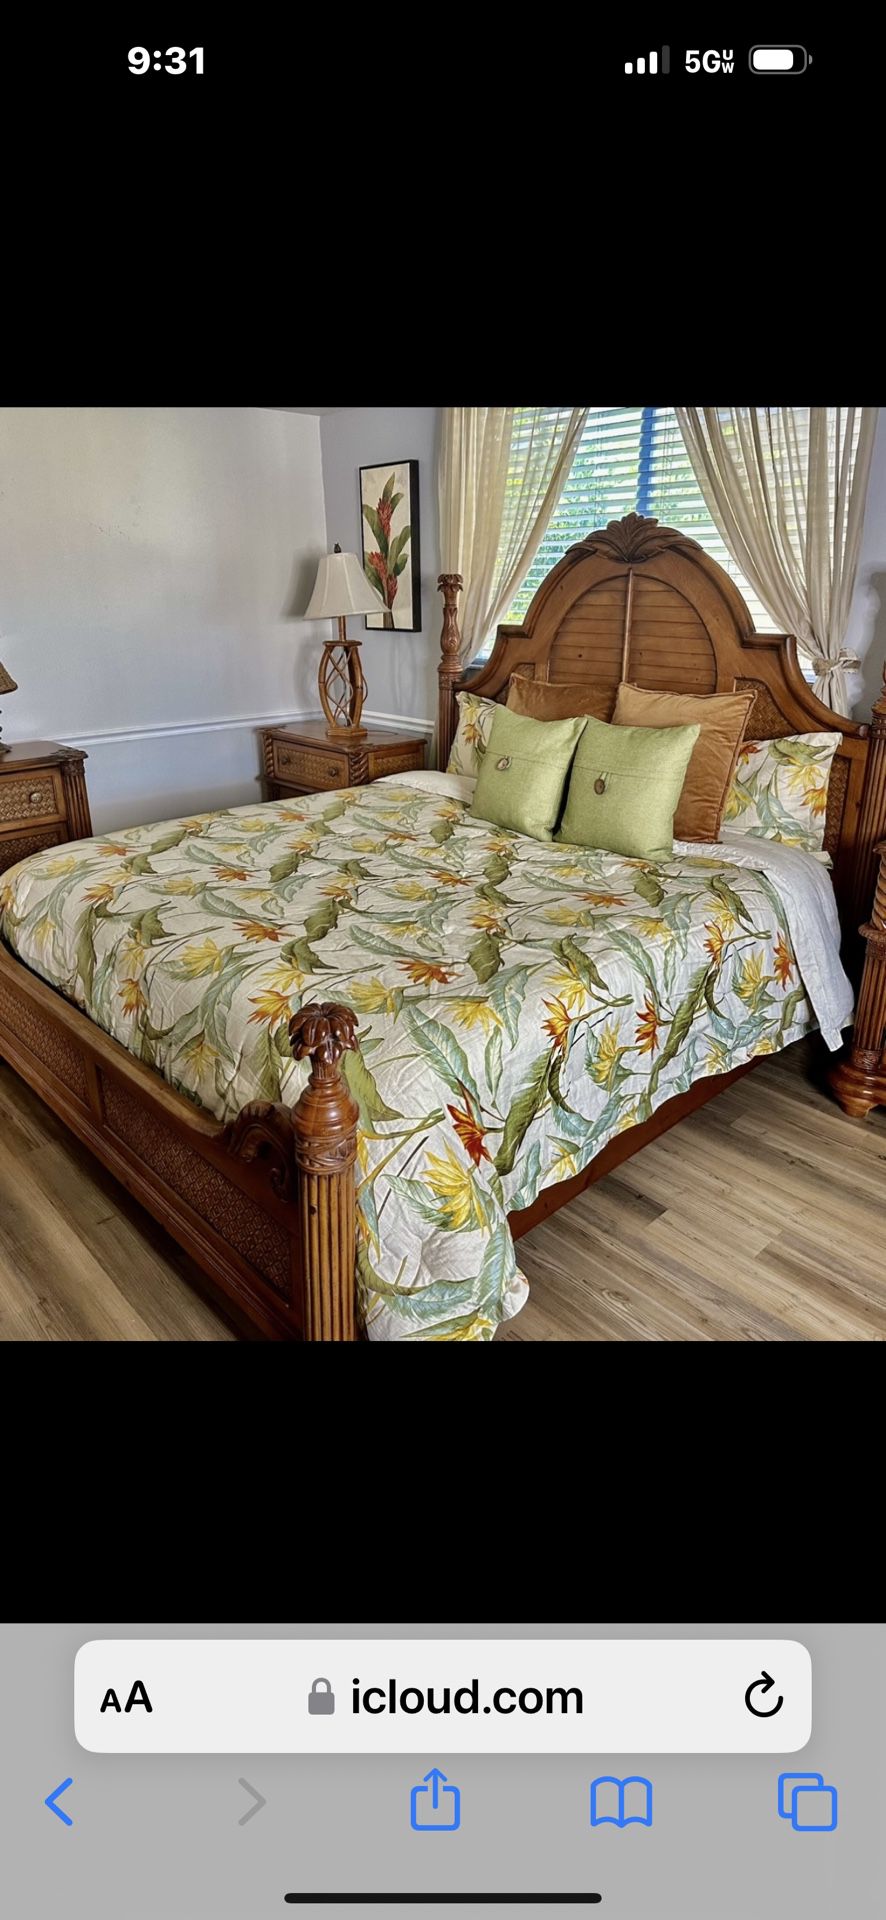 6 Piece Tommy Bahama Style Queen Bedroom Set 